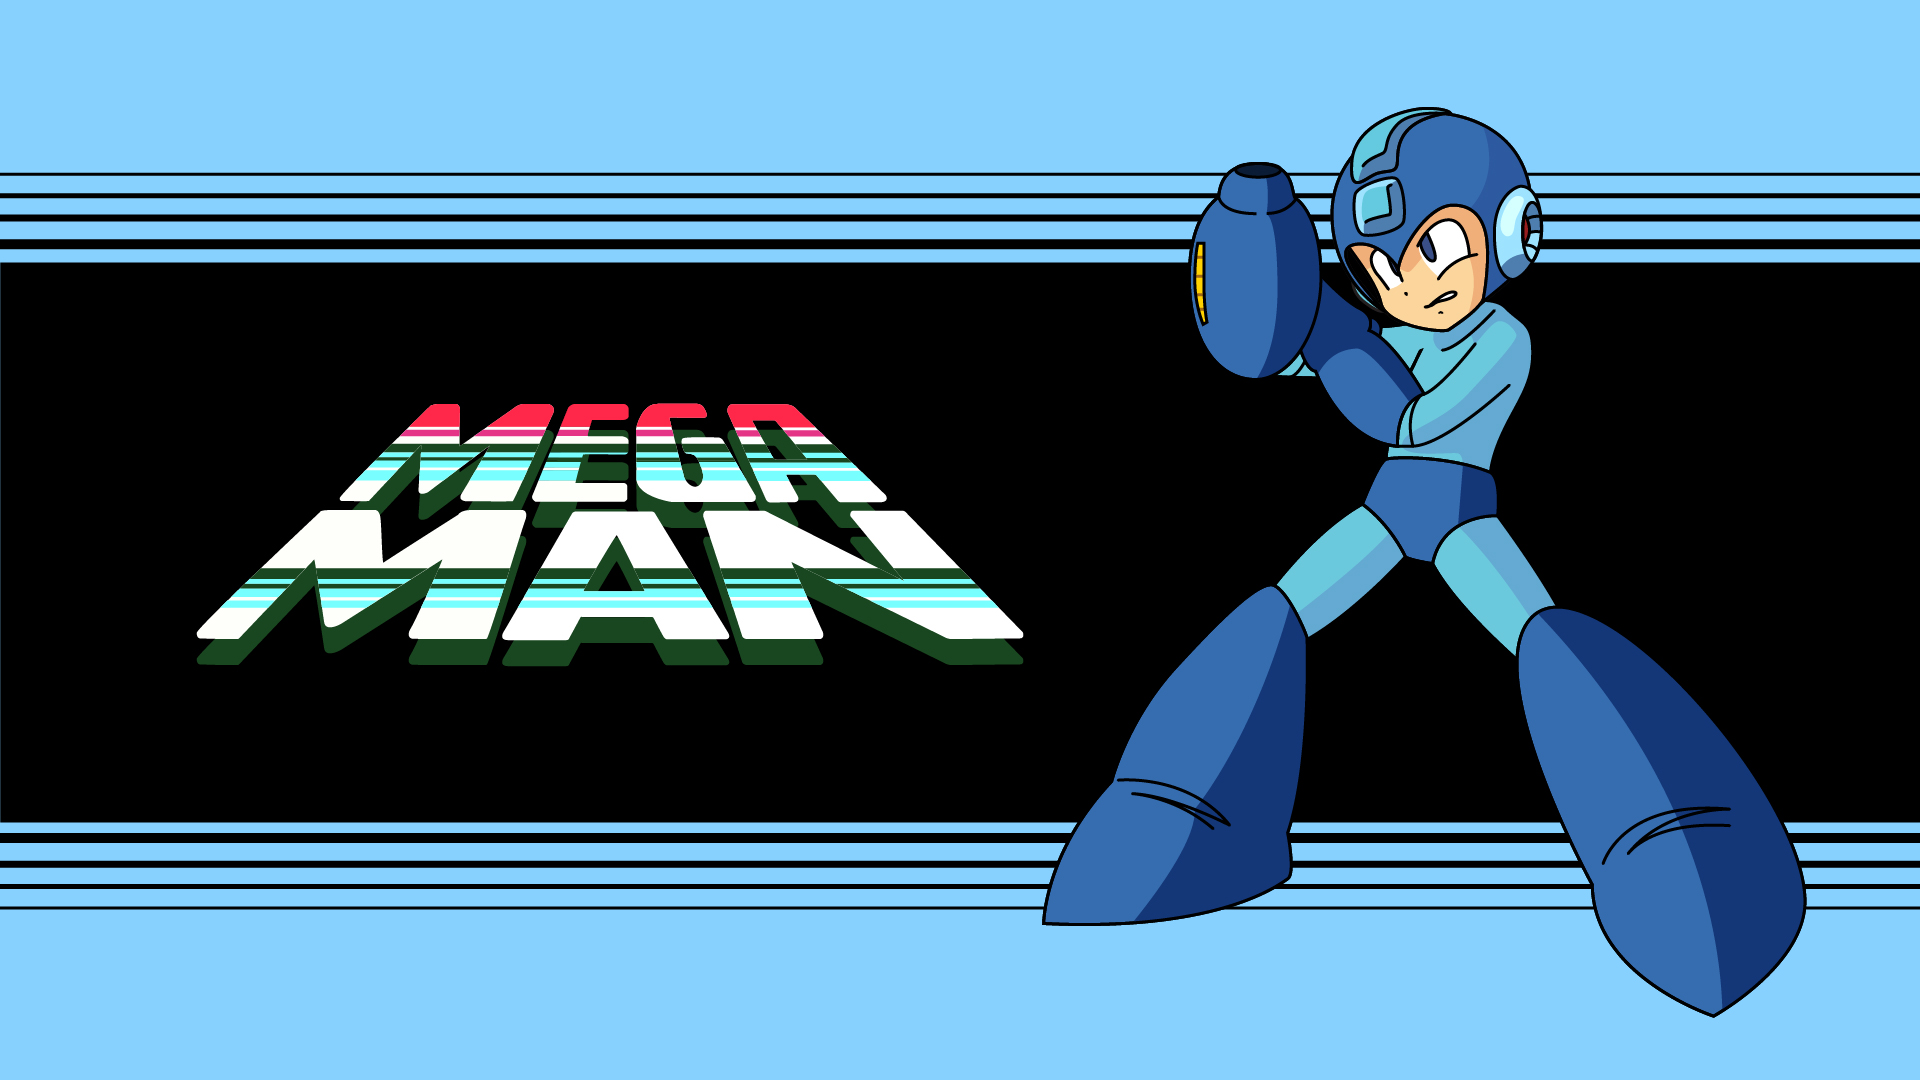 High Resolution Wallpaper | Mega Man 1920x1080 px